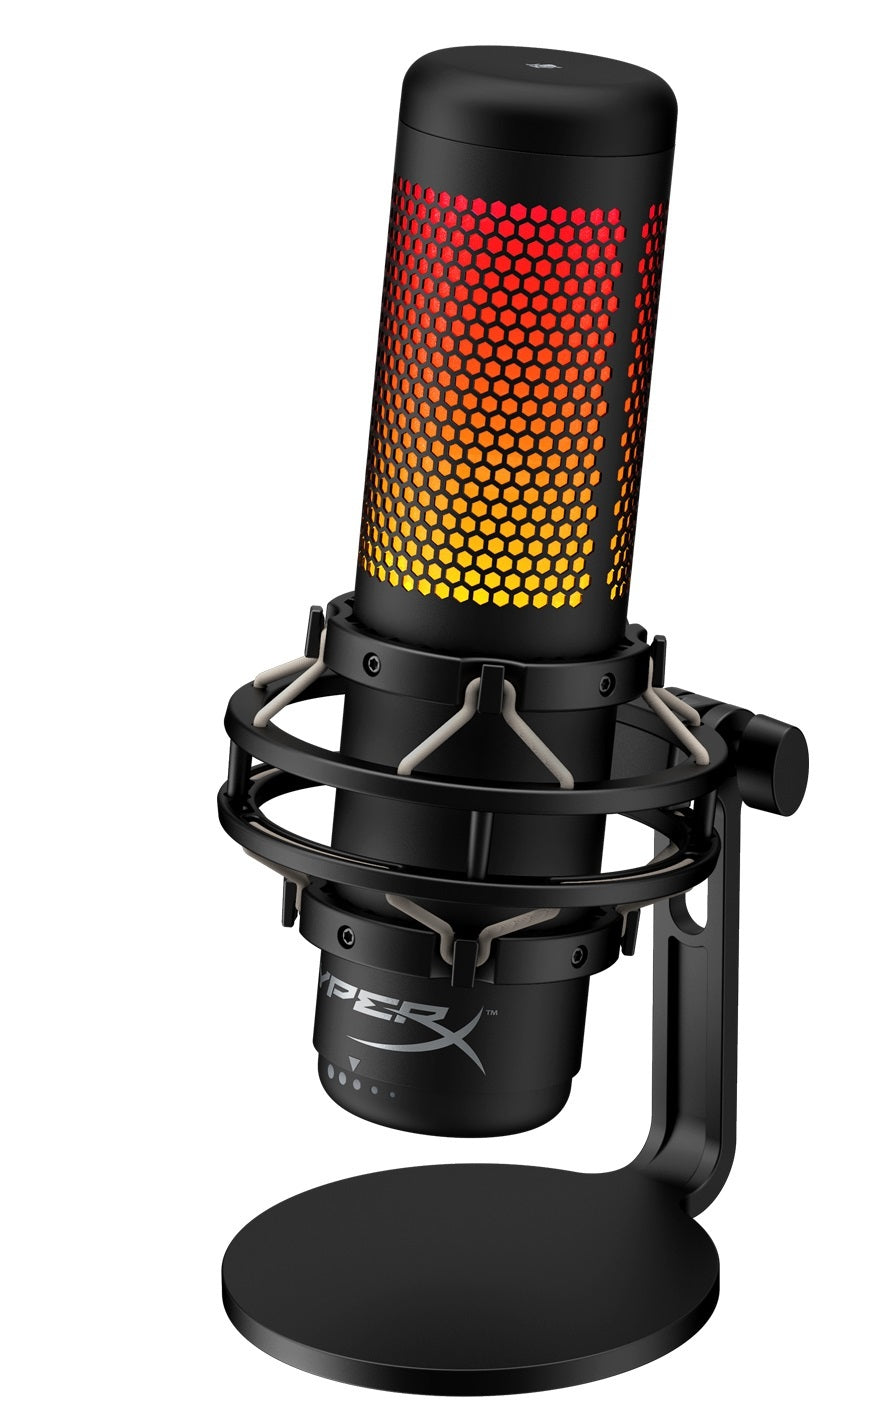 HyperX QuadCast S USB Condenser Microphone